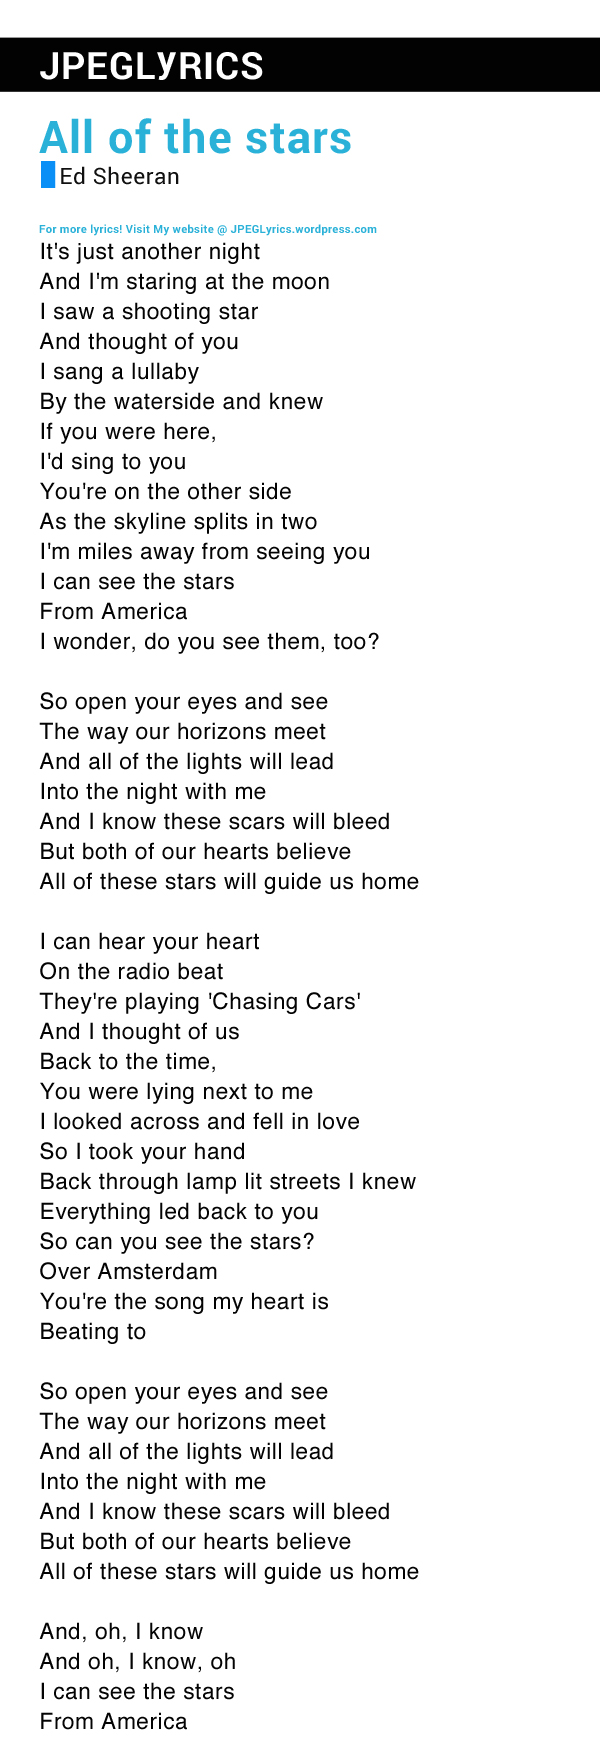 All of the stars by Ed Sheeran lyrics | JPEG Lyrics